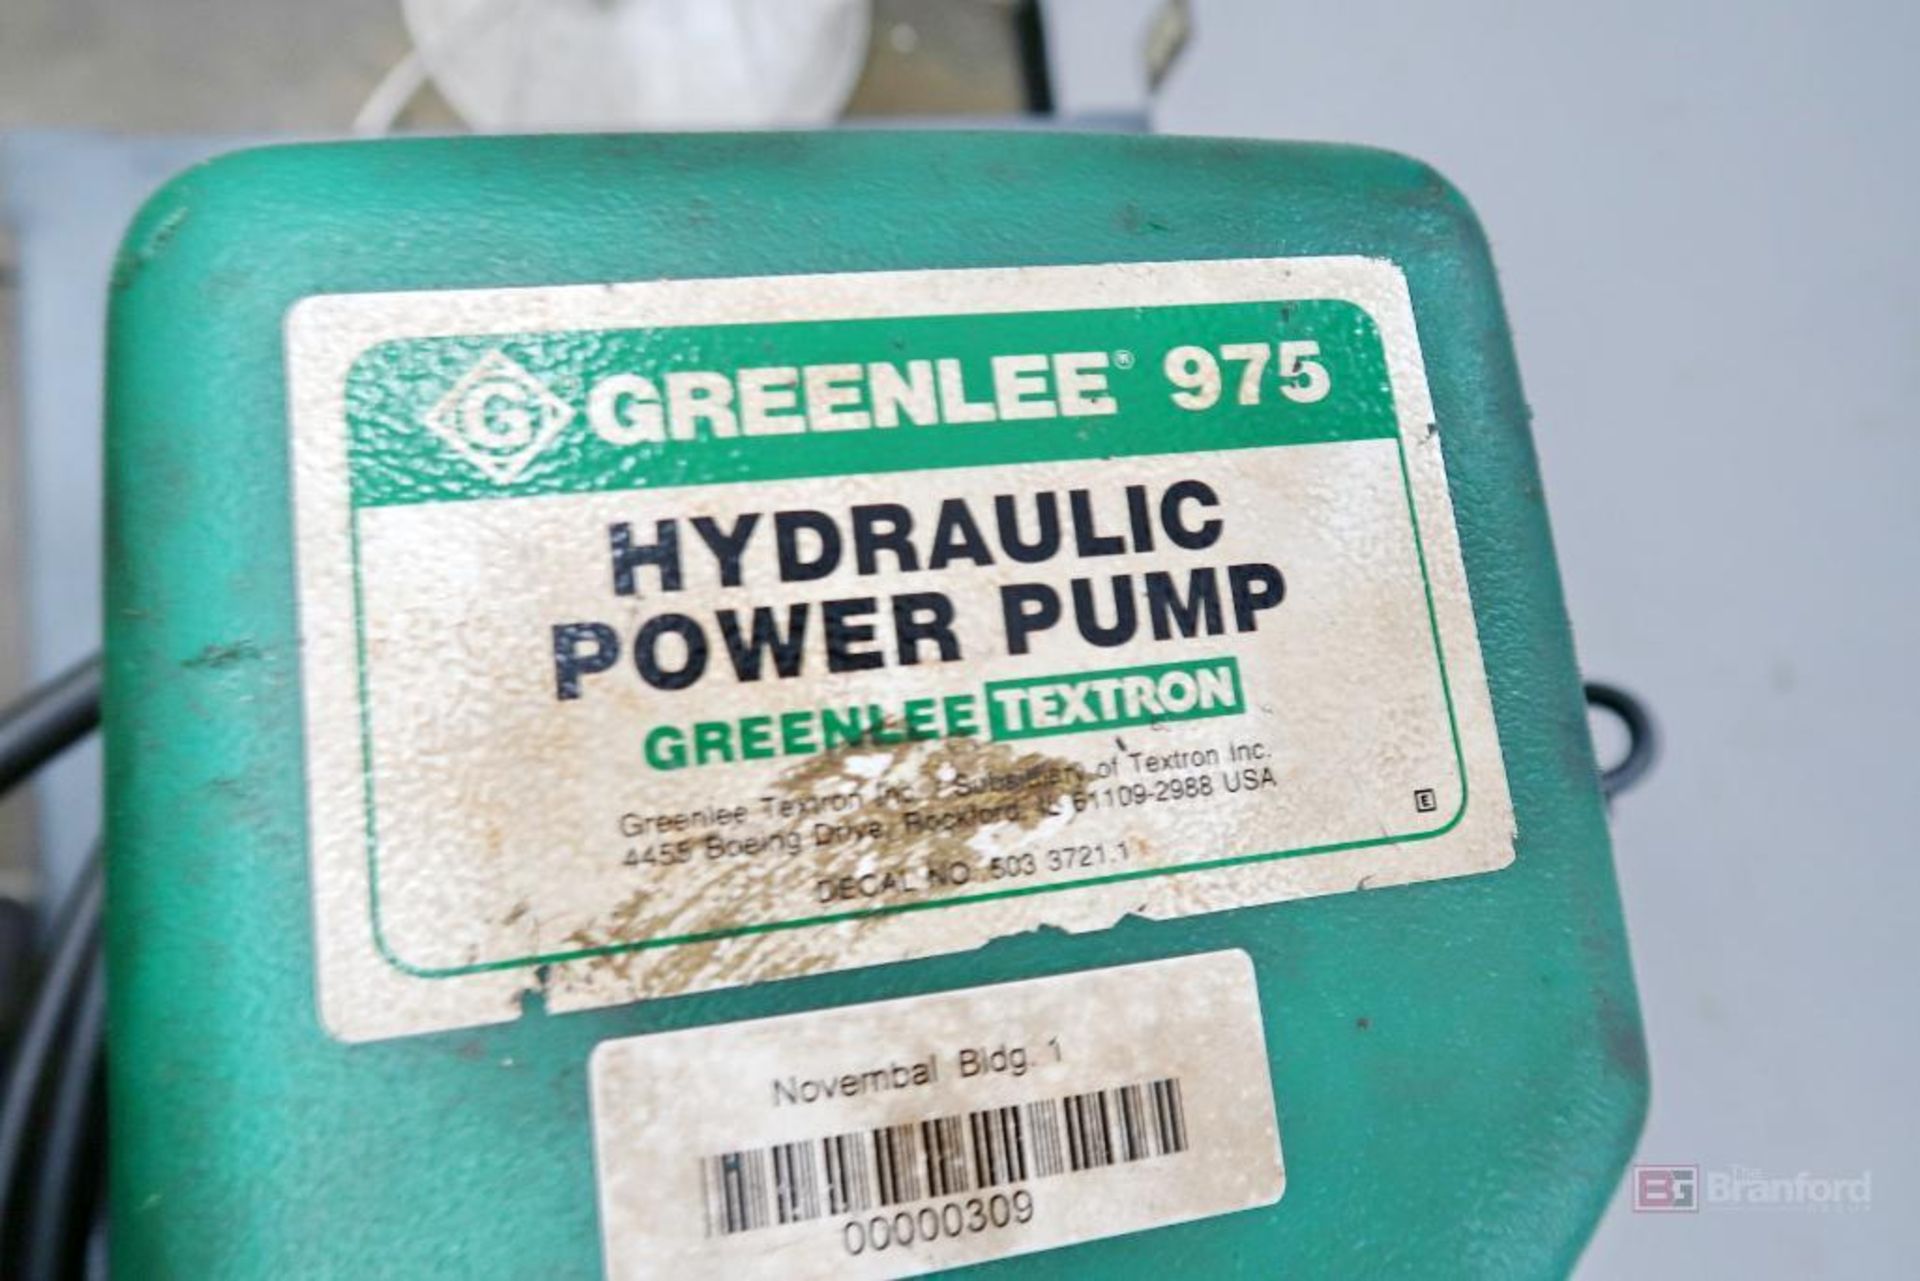 Greenlee Hydraulic Power Pump 975 - Image 3 of 8